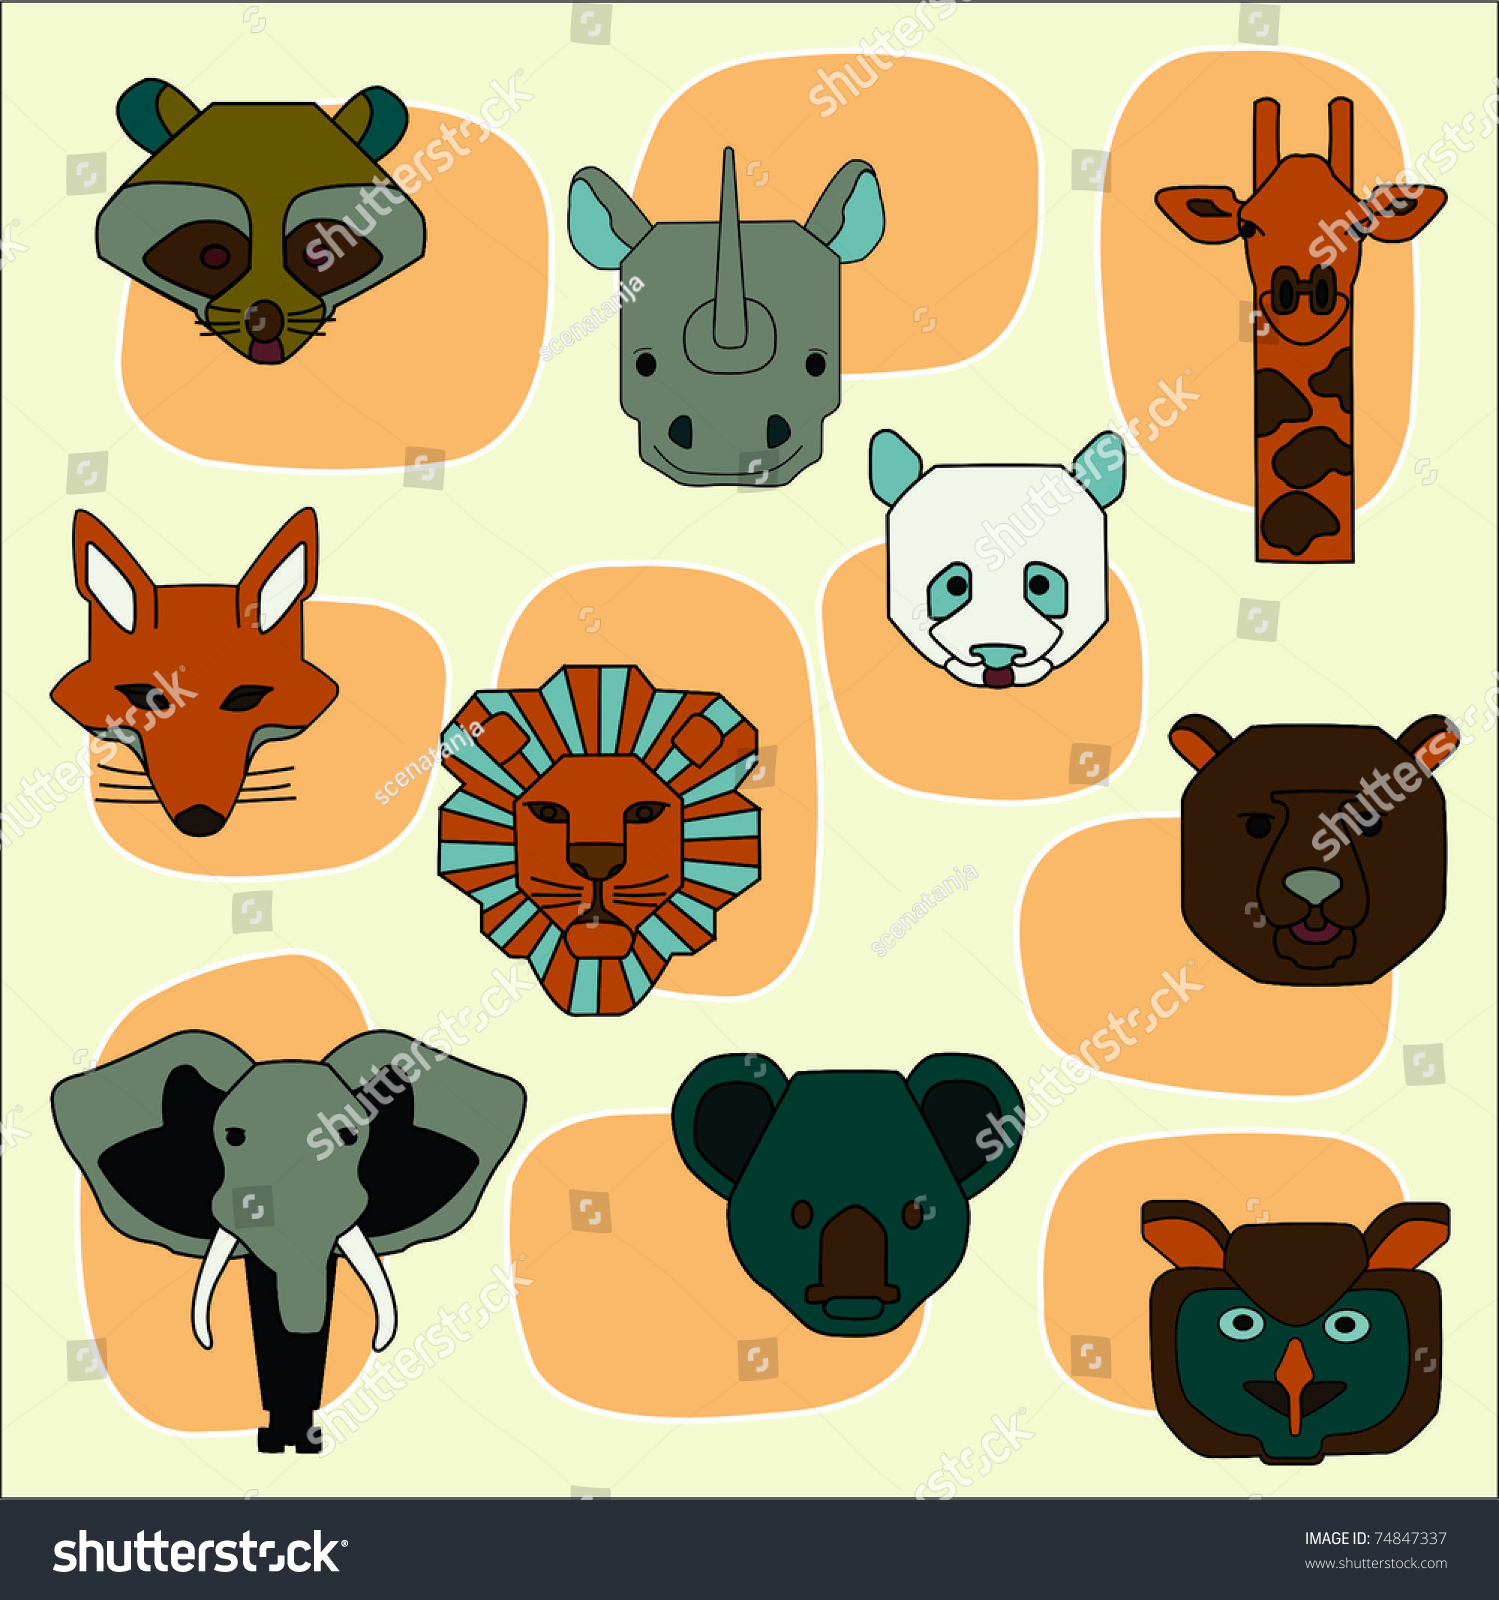 Animal Stock Vector Illustration 74847337 : Shutterstock